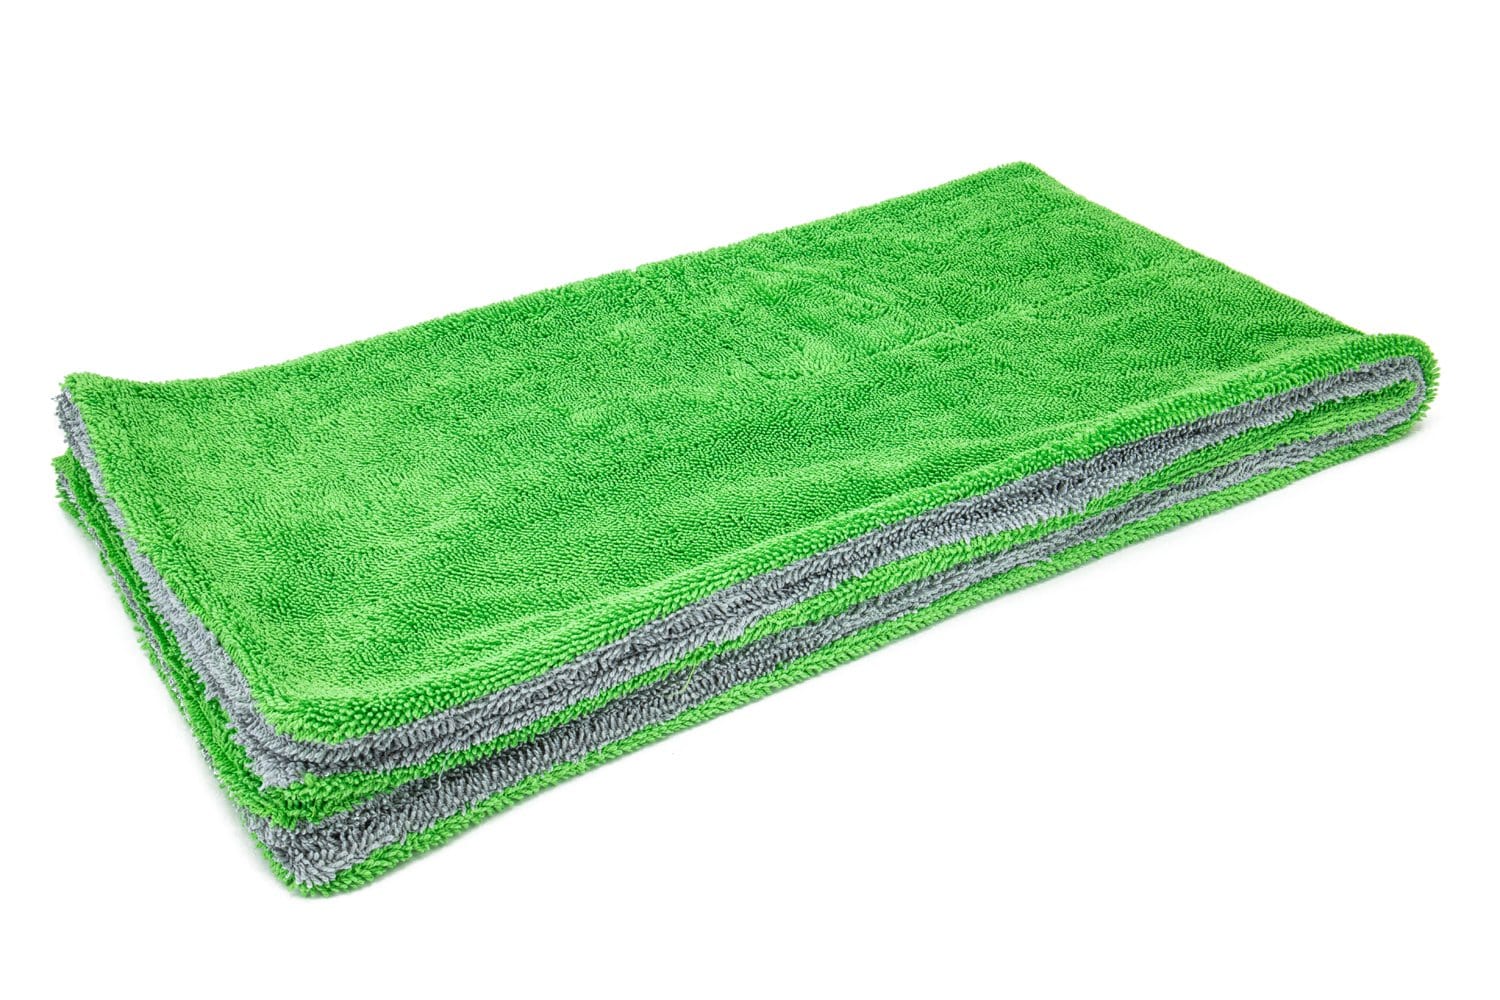 Autofiber Towel Green/Gray Dreadnought XL - Microfiber Car Drying Towel (20 in. x 40 in., 1100gsm) - 1 pack